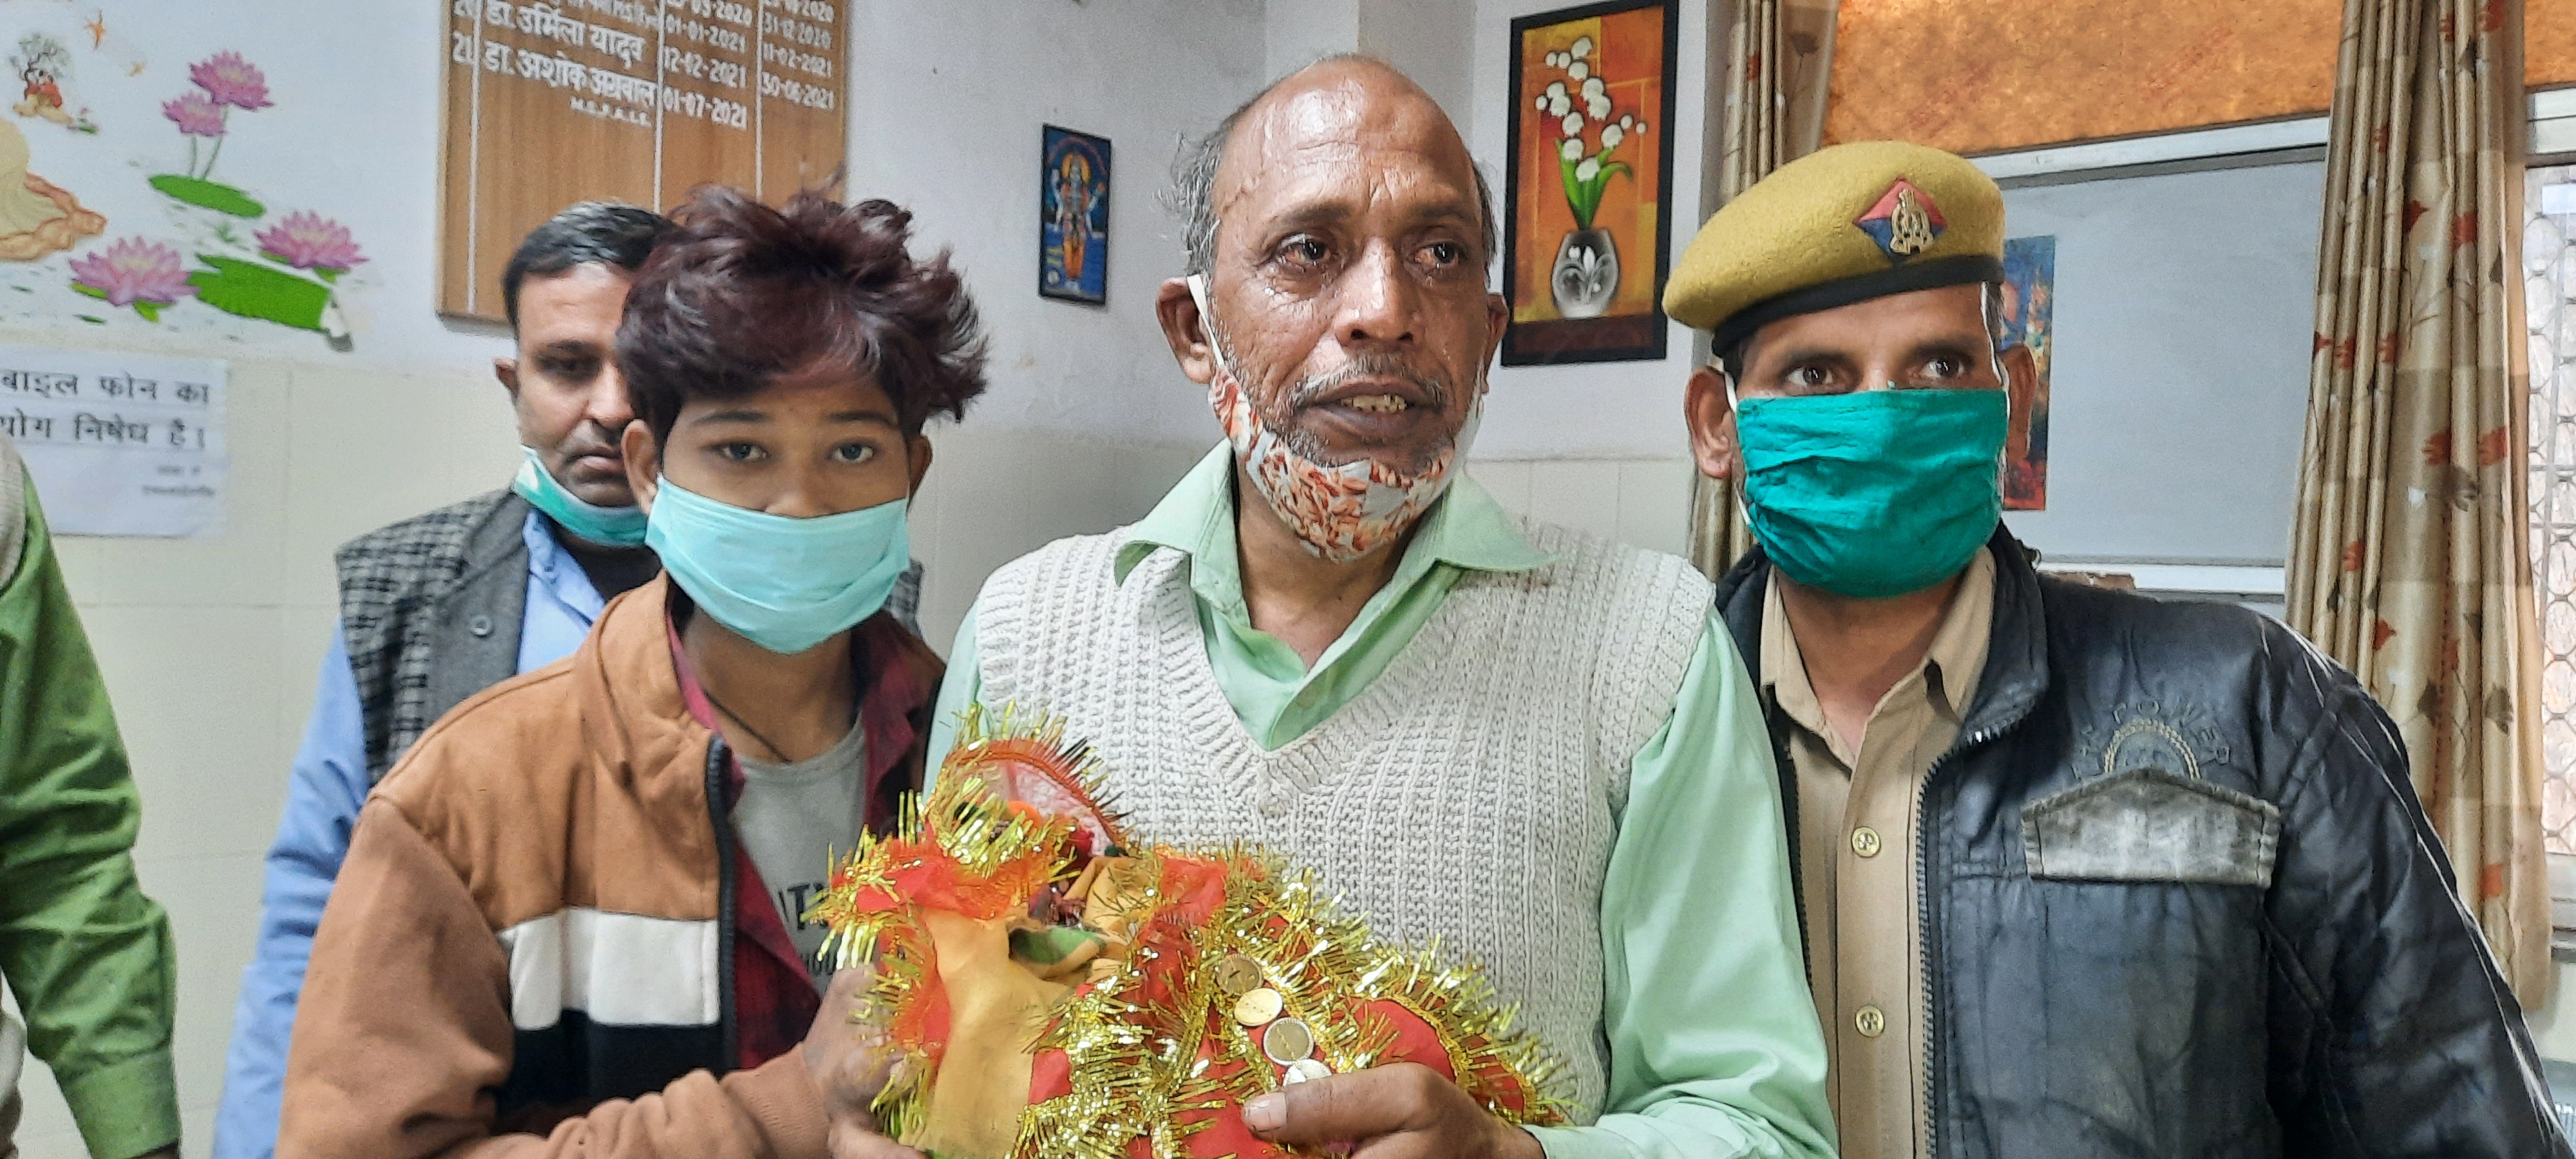 Devotee got Laddu Gopal idol plastered